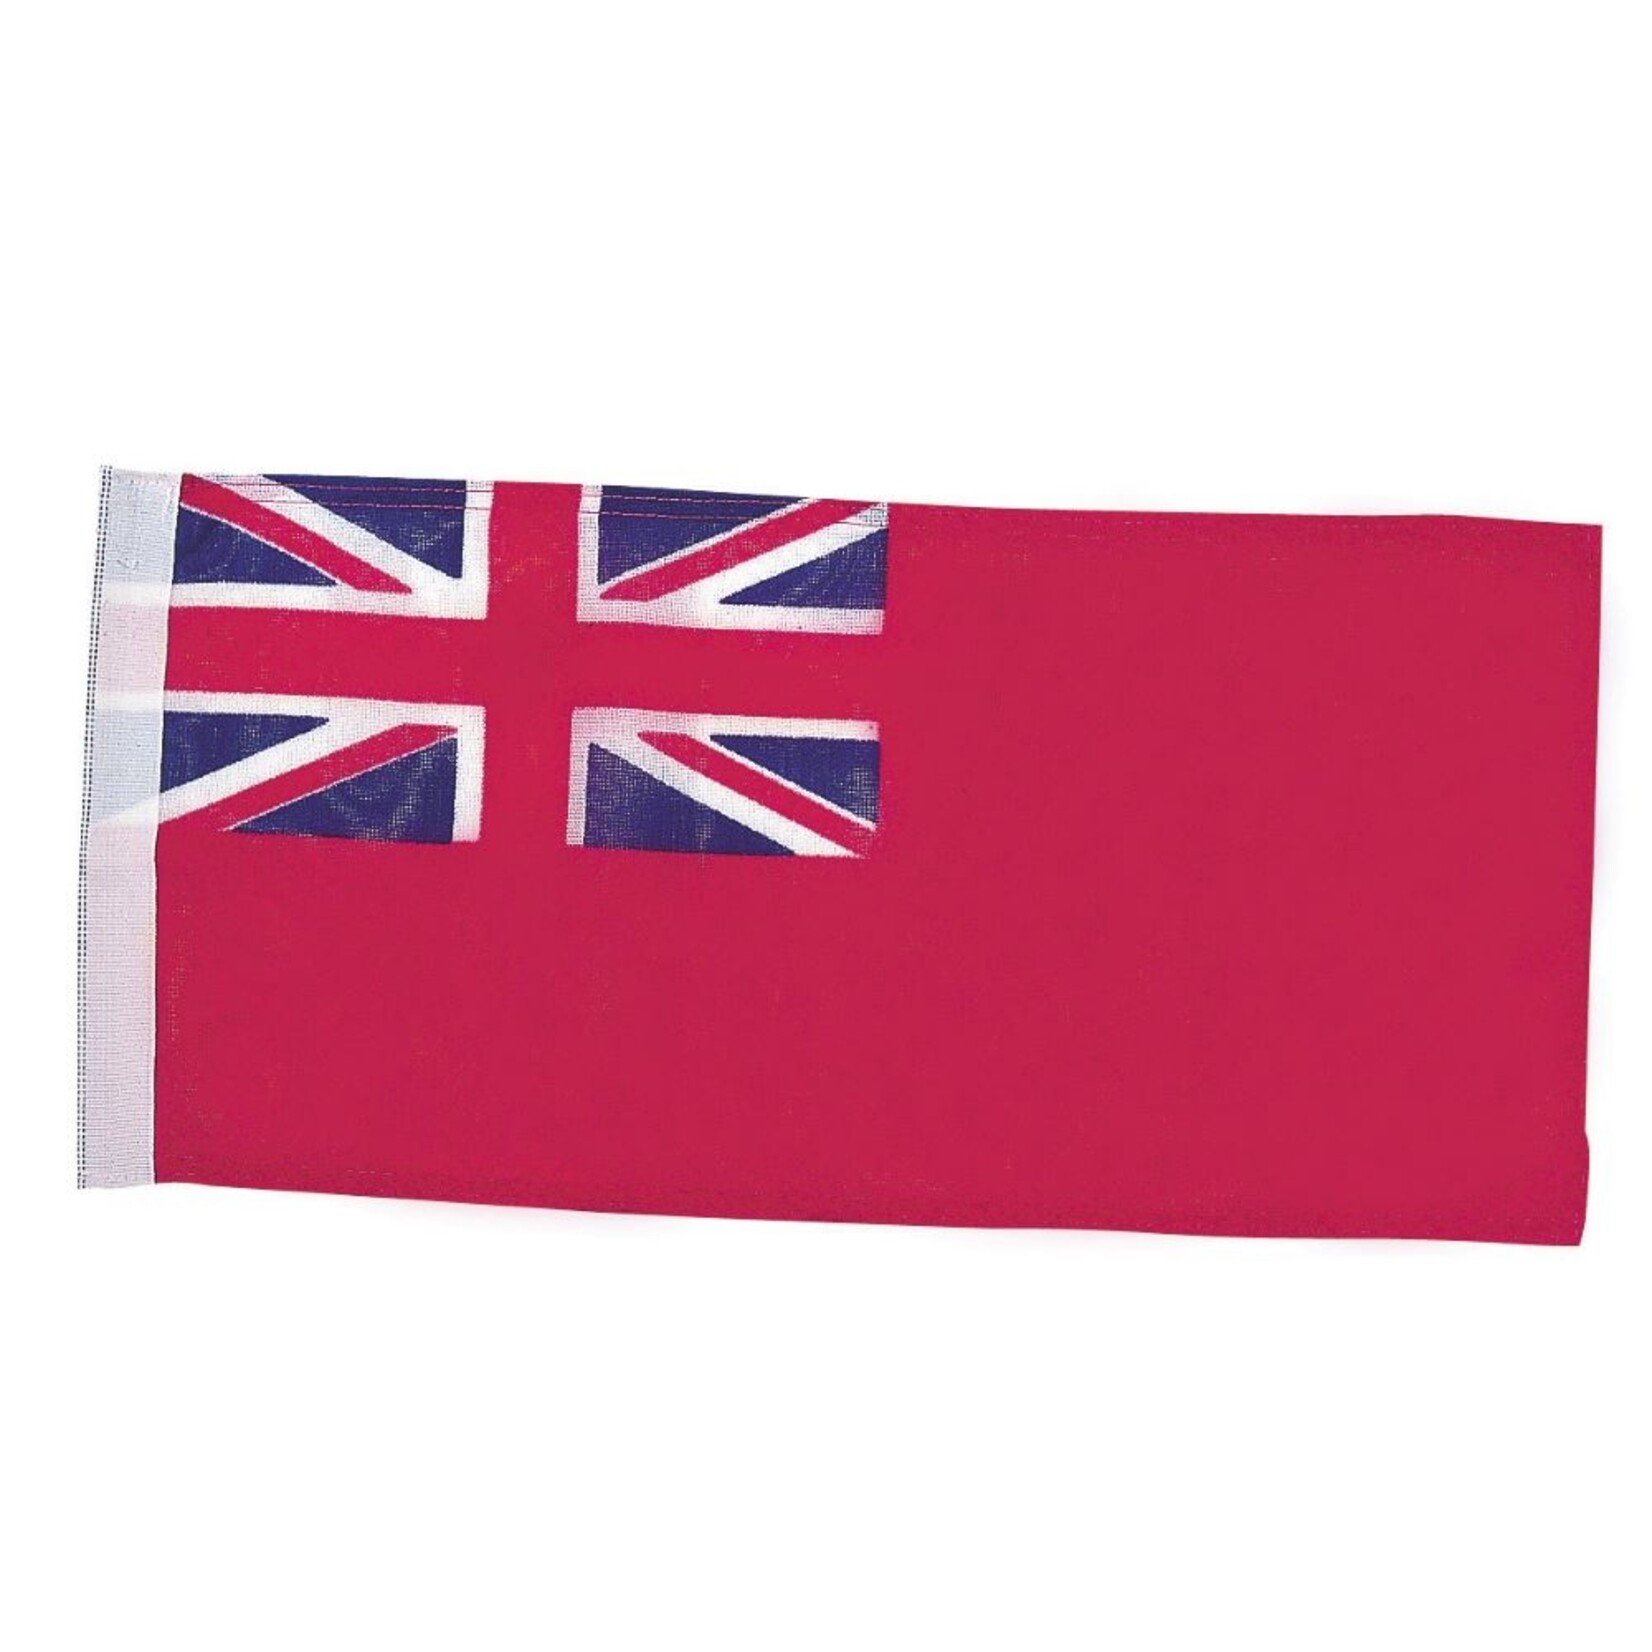 Plastimo Red ensign 50 x 75 cm